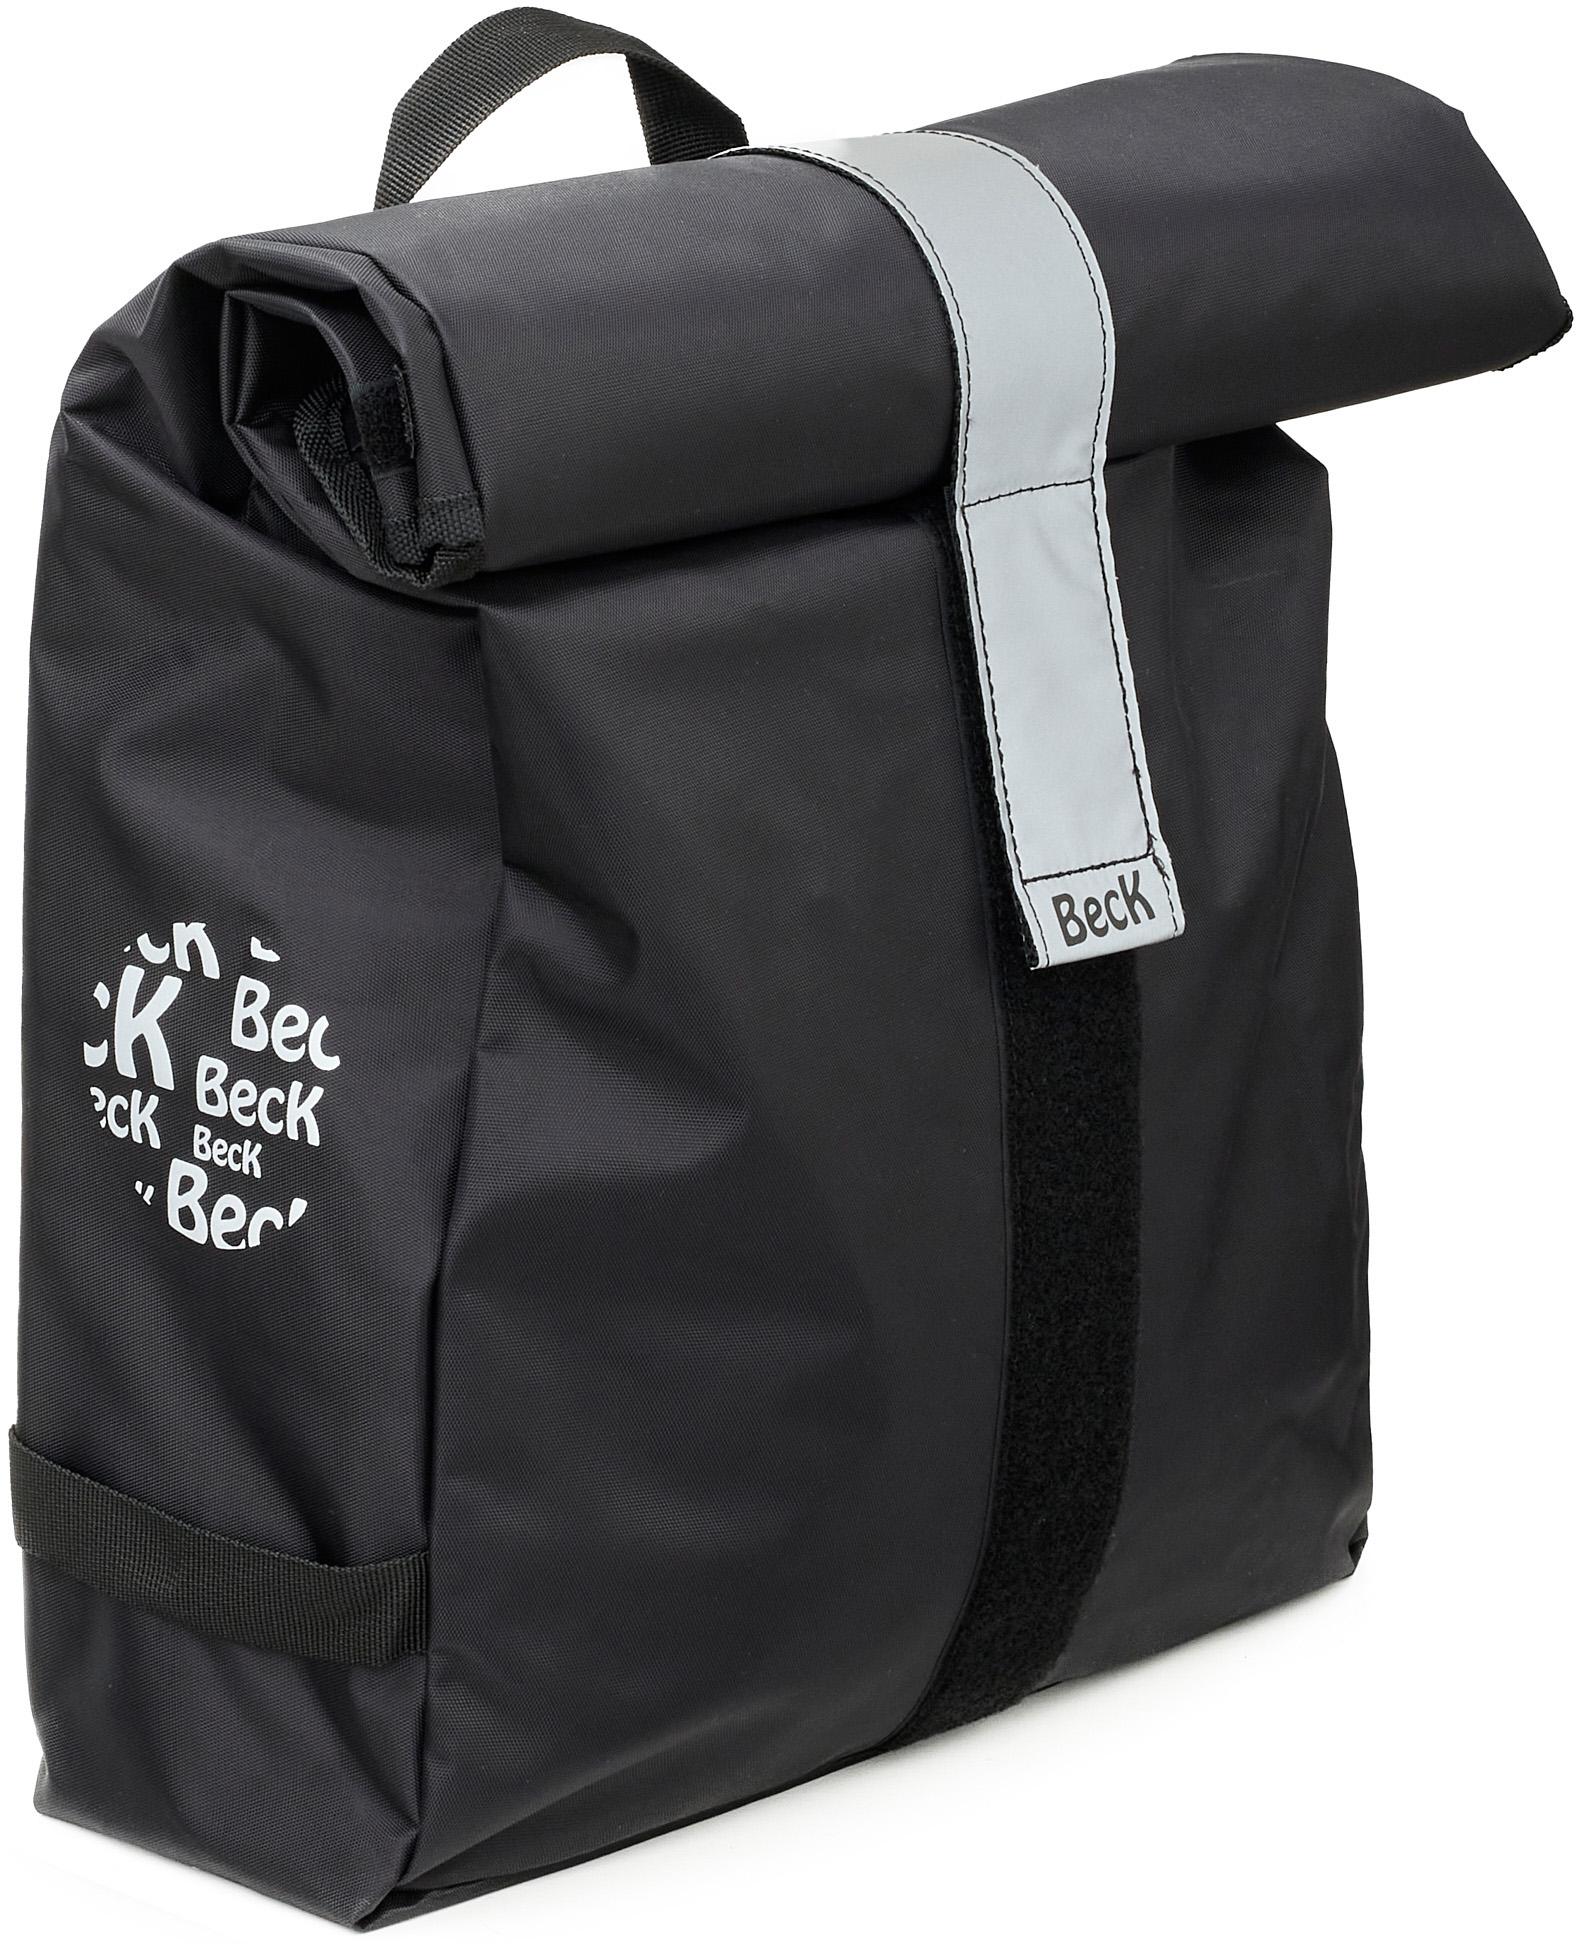 Beck Roll Single Pannier Bag Black